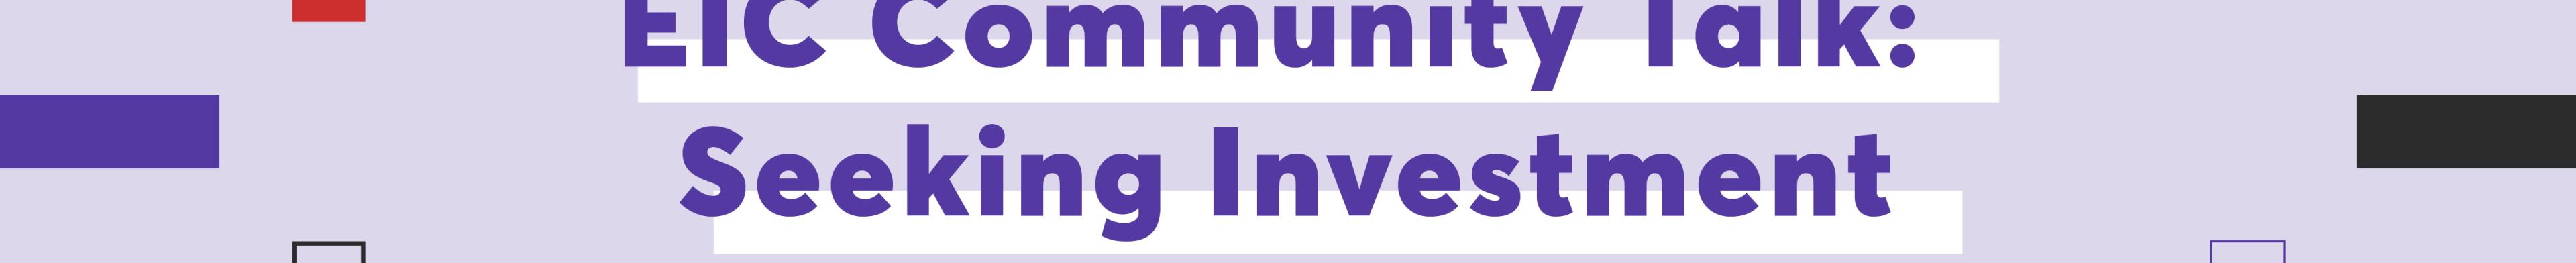 community_talk_seeking_investment_banner.jpg